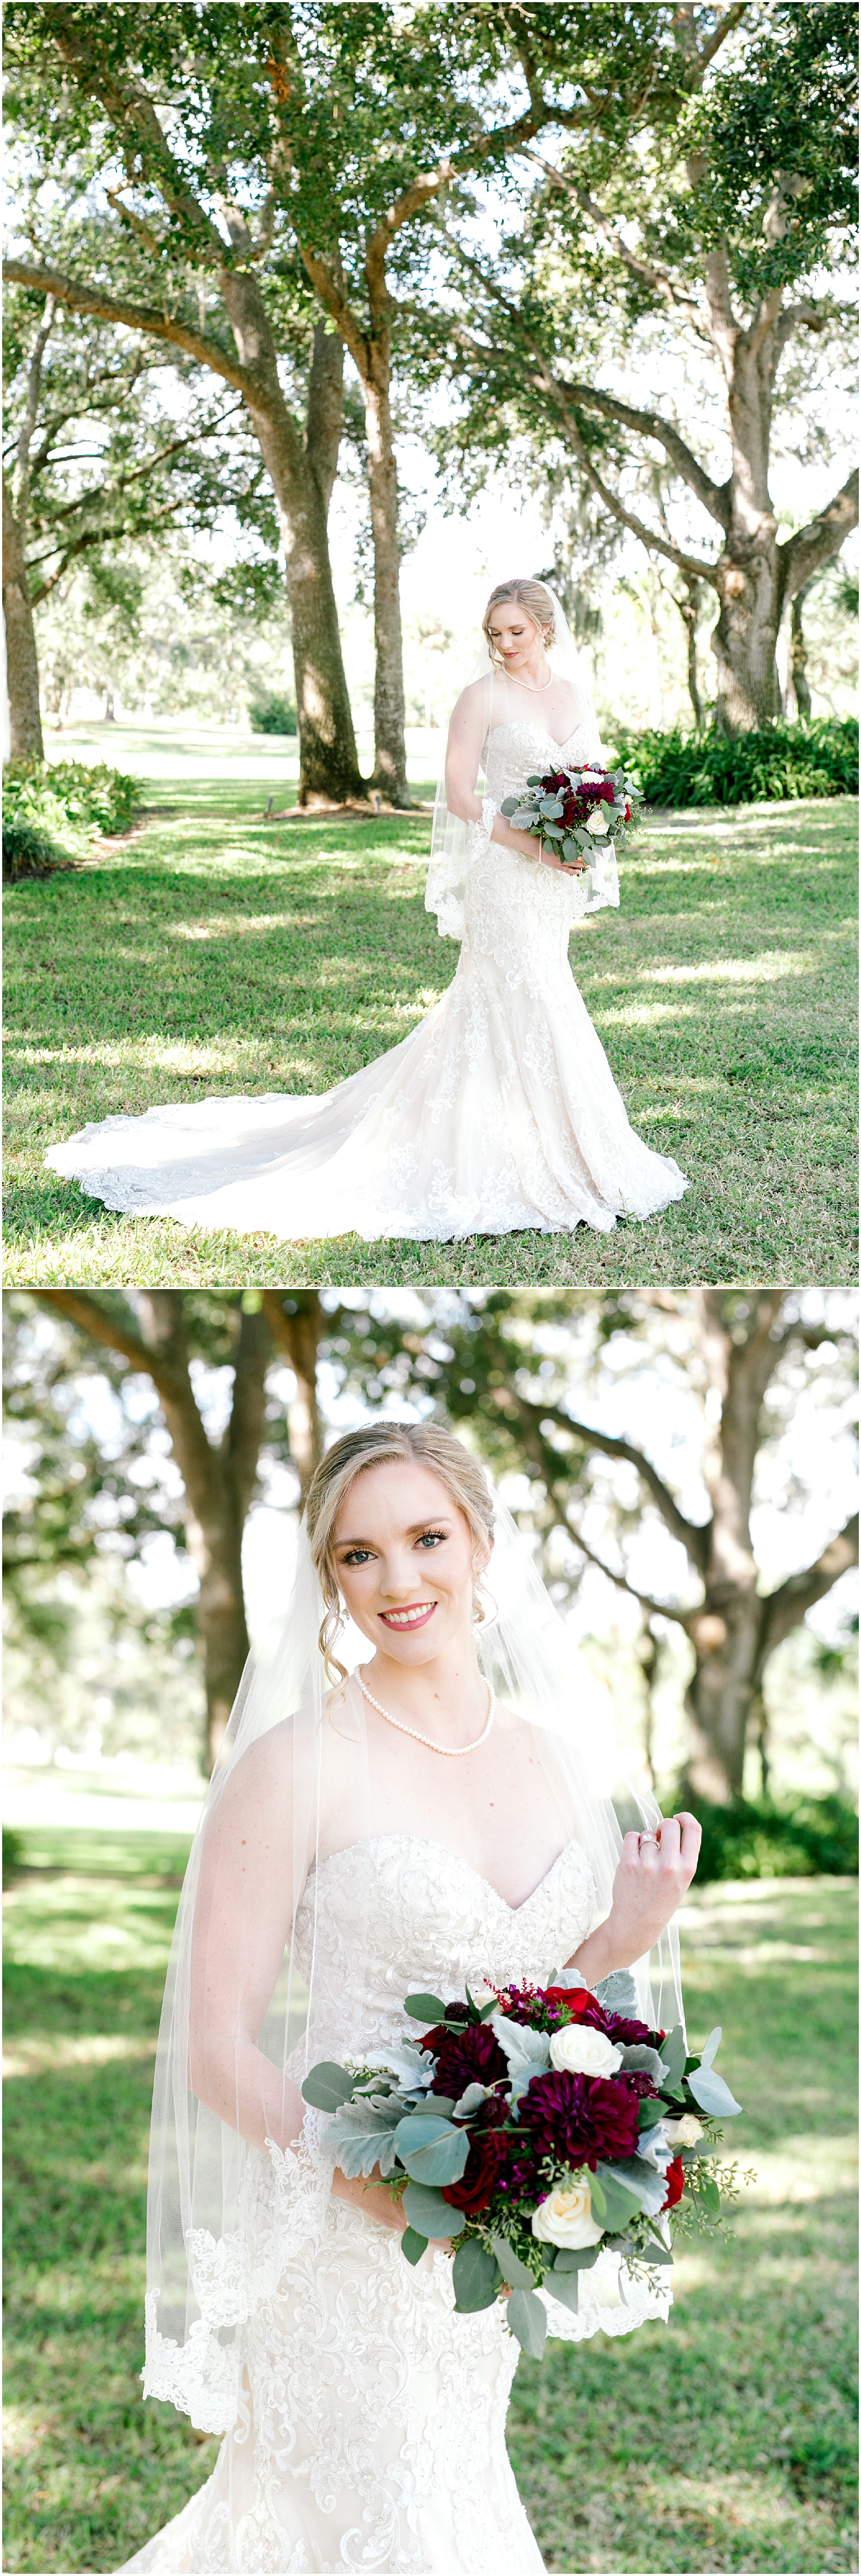 Bride standing in the grass under trees in her wedding dress